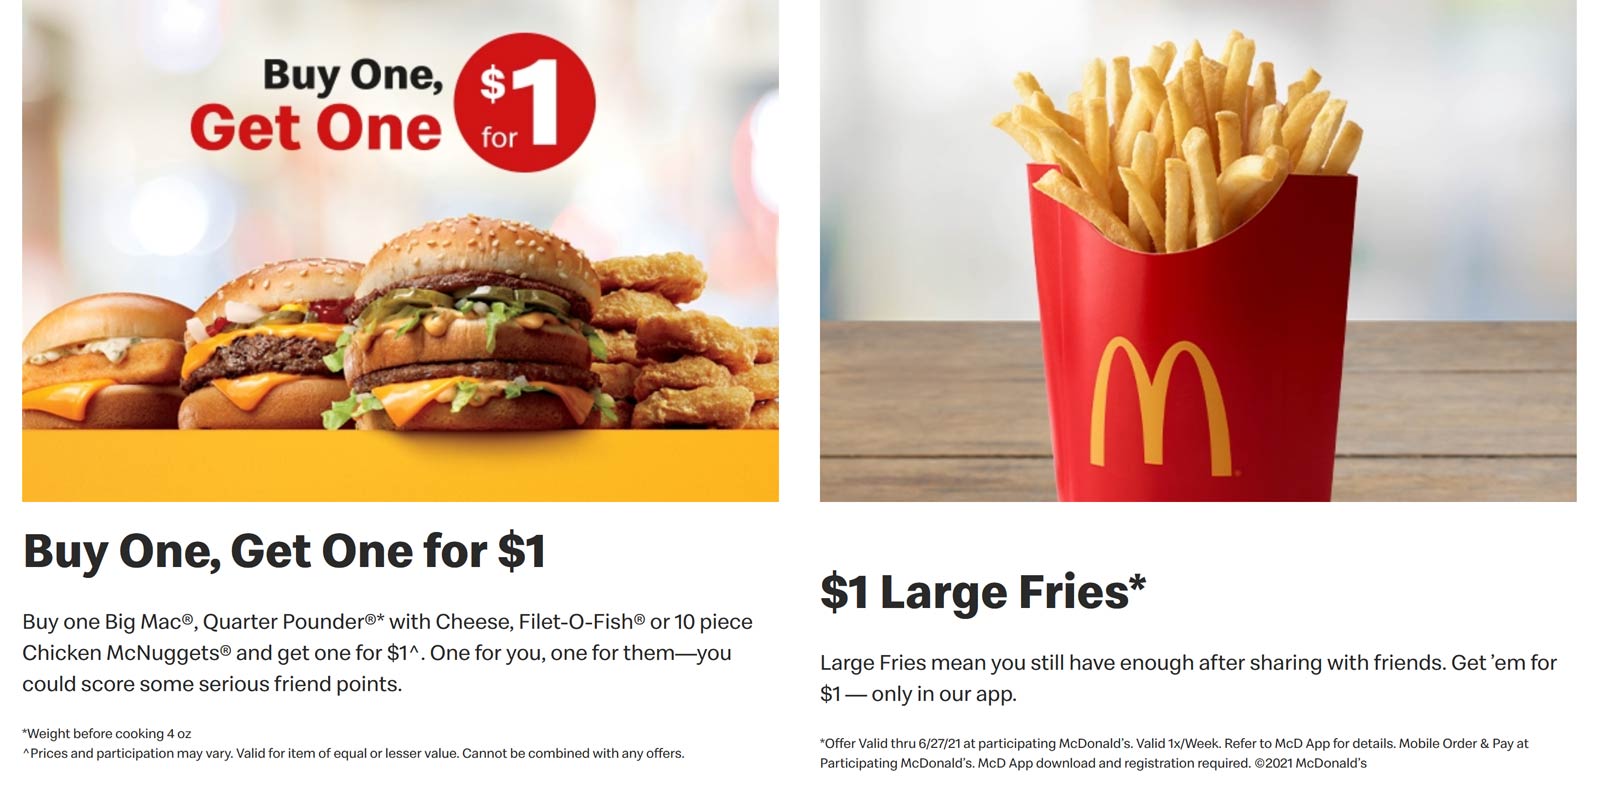 McDonalds restaurants Coupon  Second Big Mac, QP, Fish or 10pc chicken nuggets for $1 at McDonalds #mcdonalds 